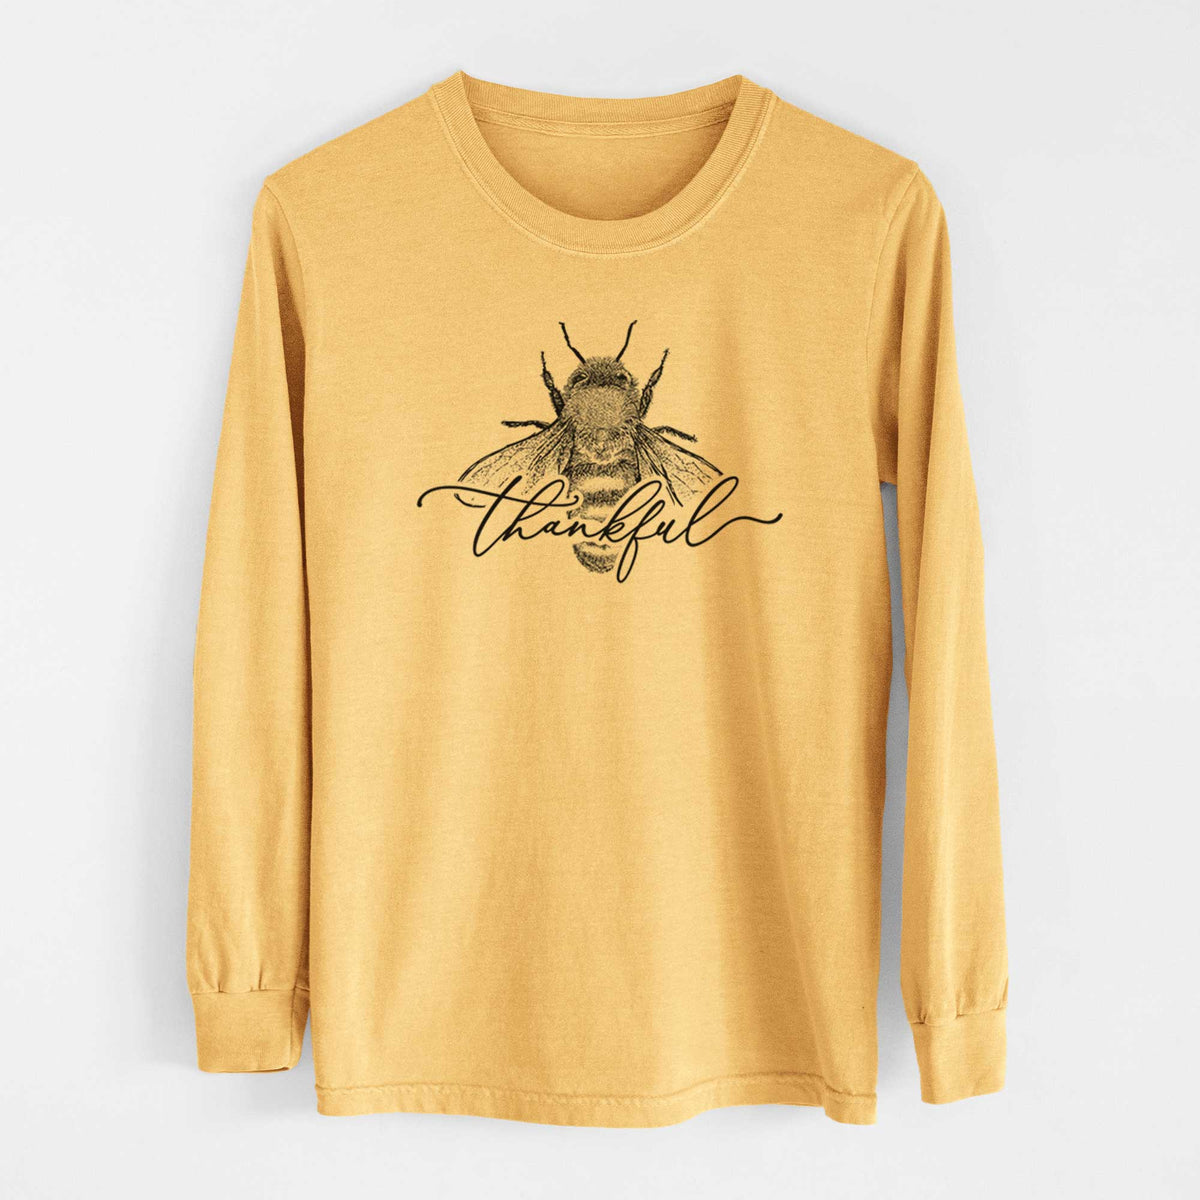 Bee Thankful - Heavyweight 100% Cotton Long Sleeve